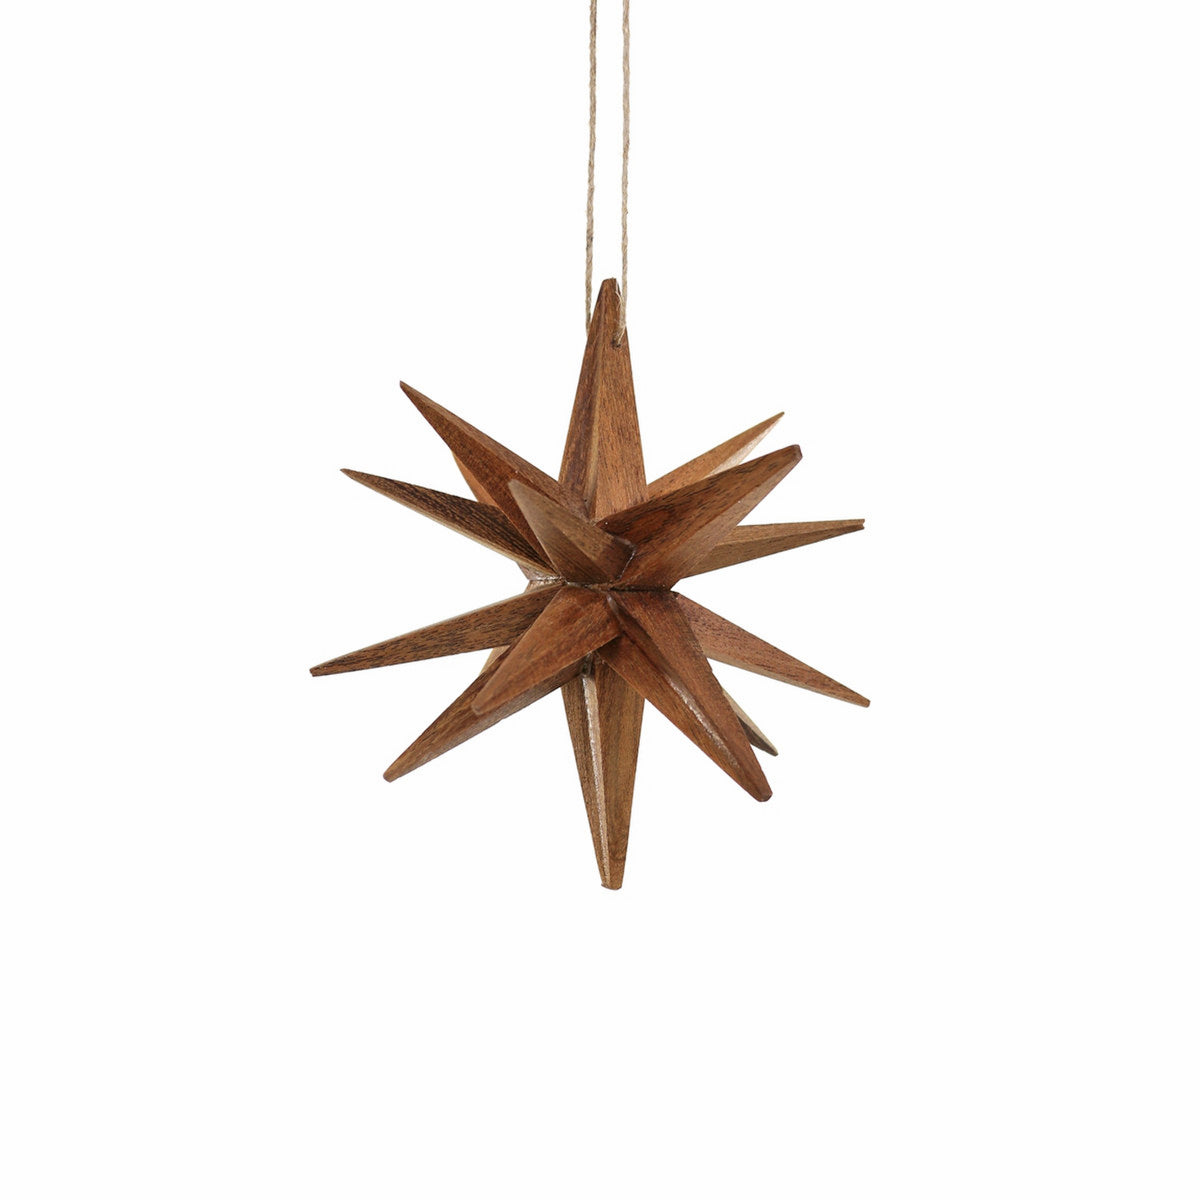 Dimensional Wood Star Christmas Ornament - Walnut